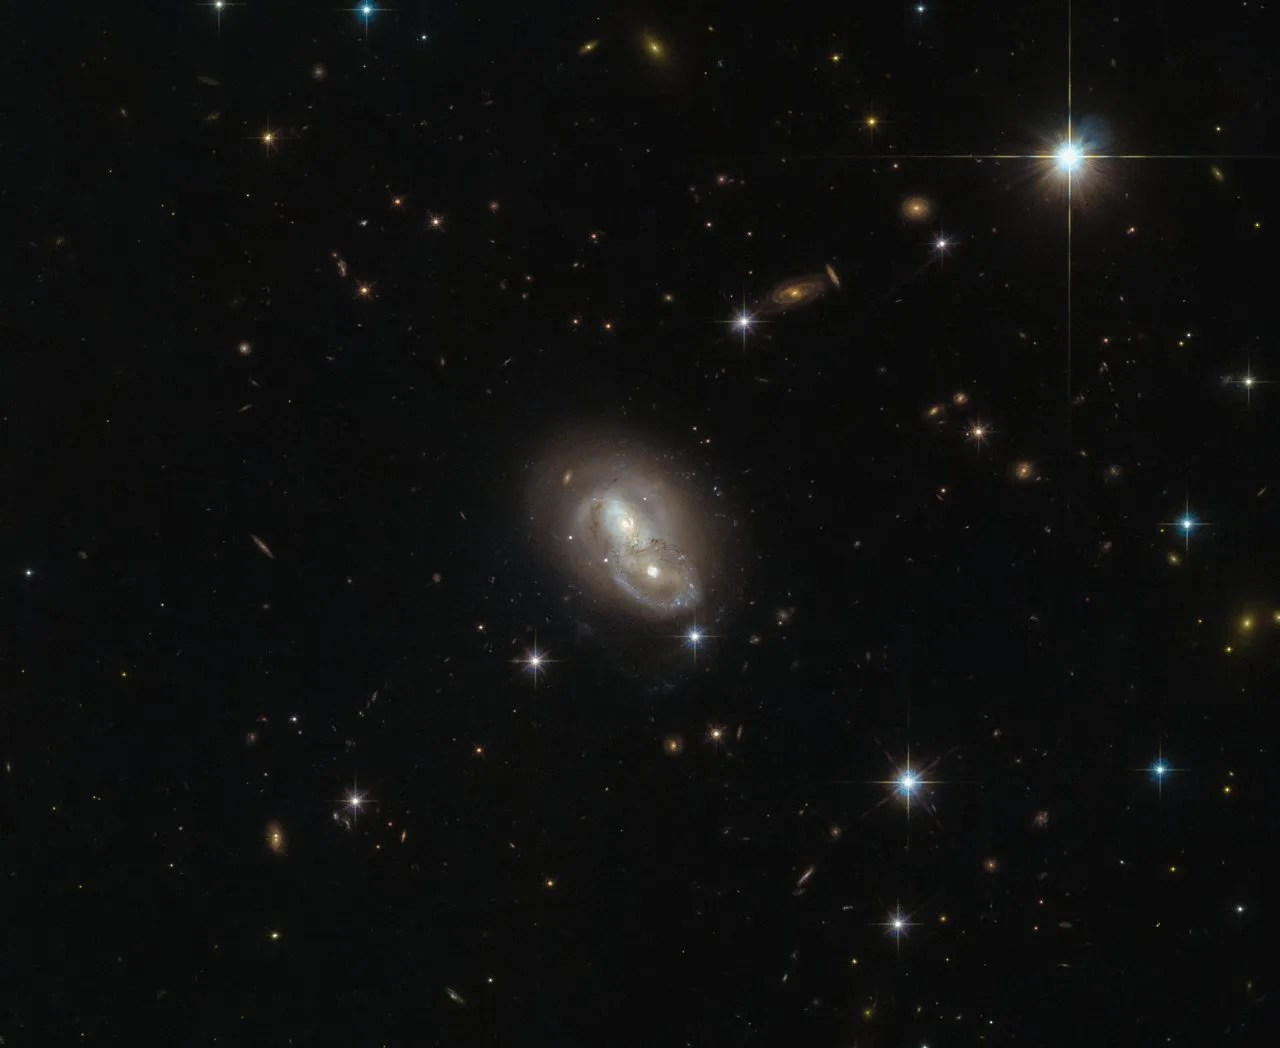 Double galaxy on a star field